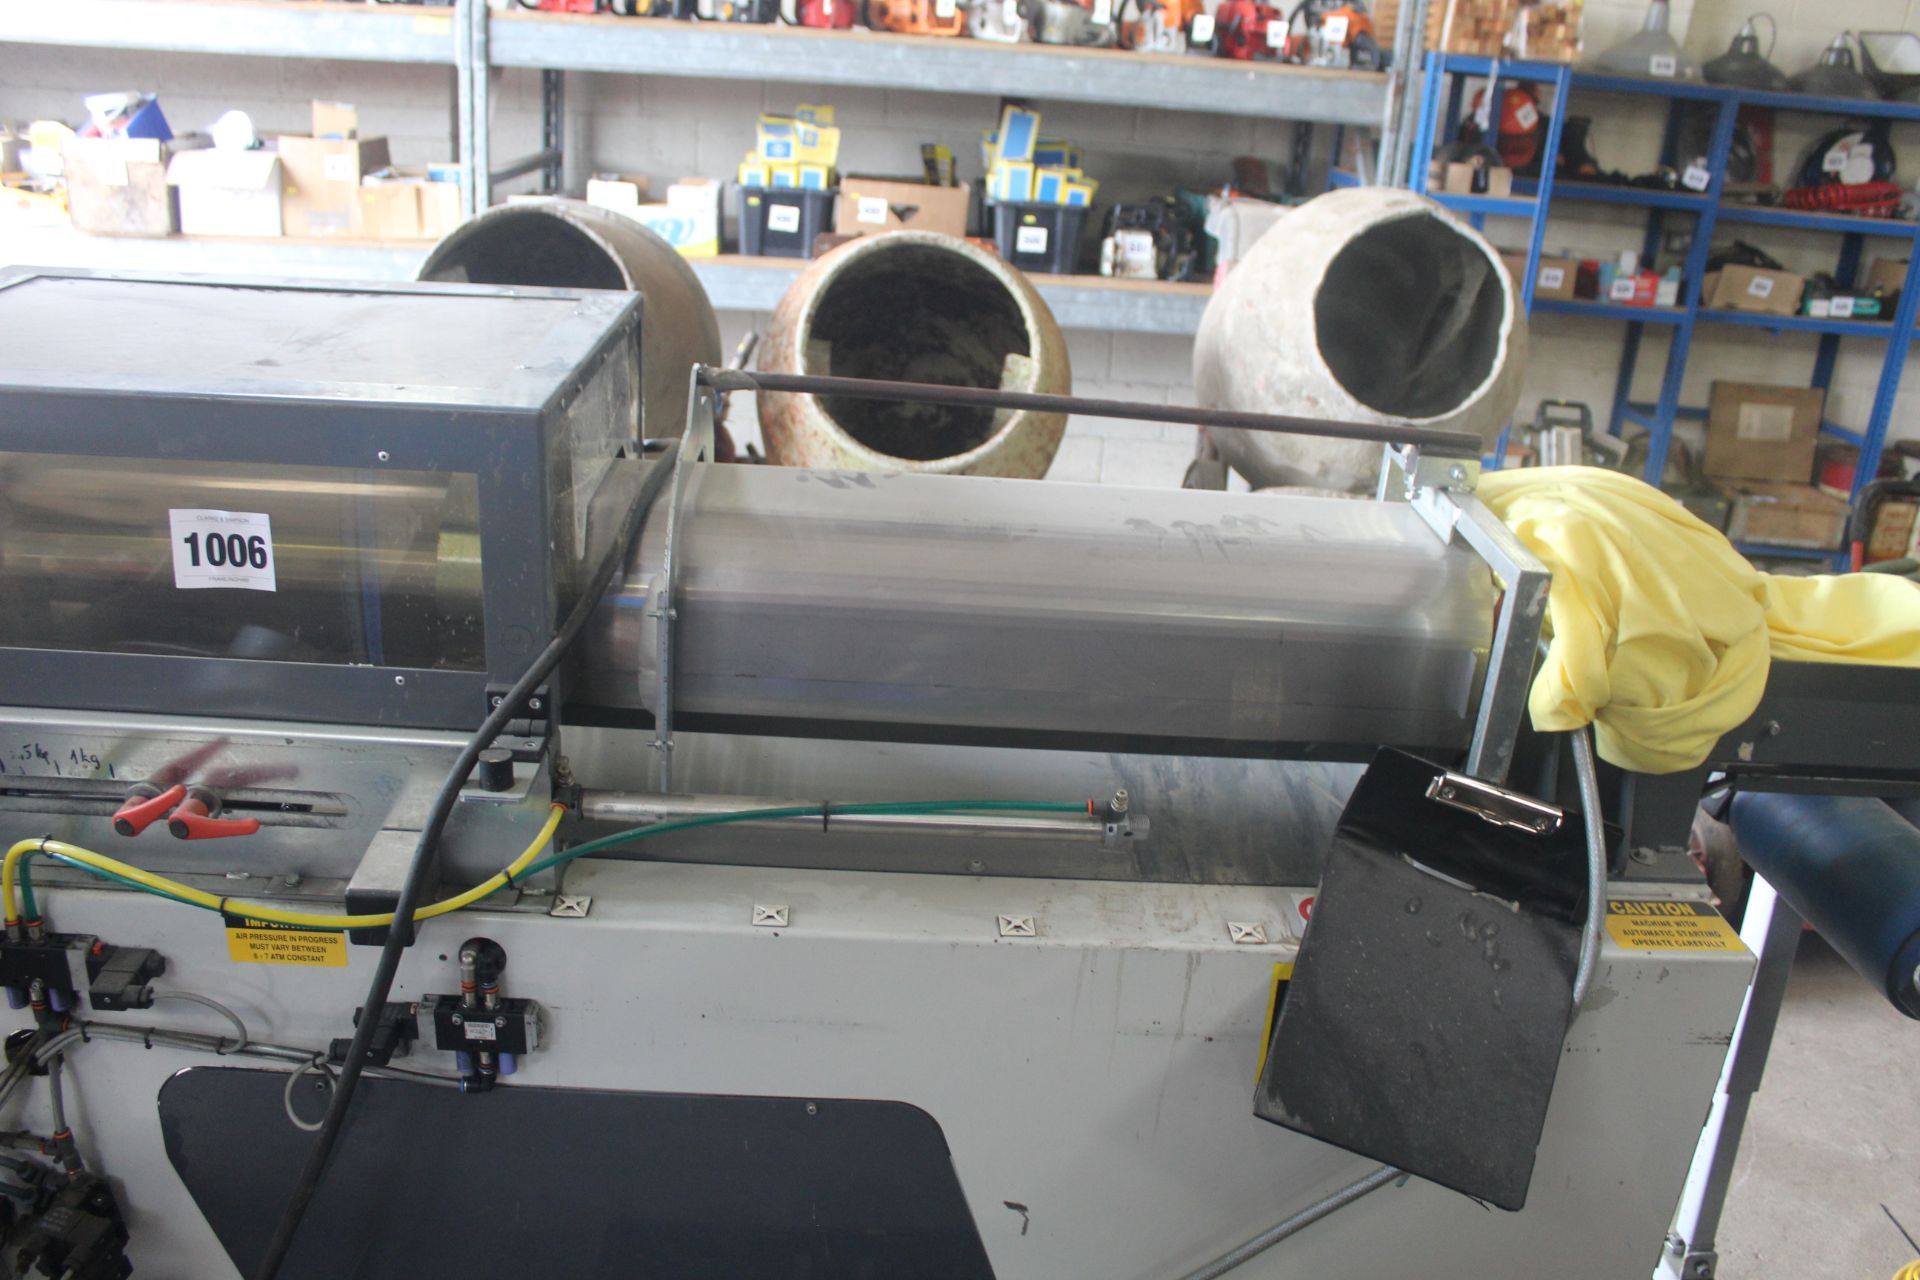 Sorma KB GX 140 produce netting machine. With label printer and output elevator. - Bild 3 aus 28